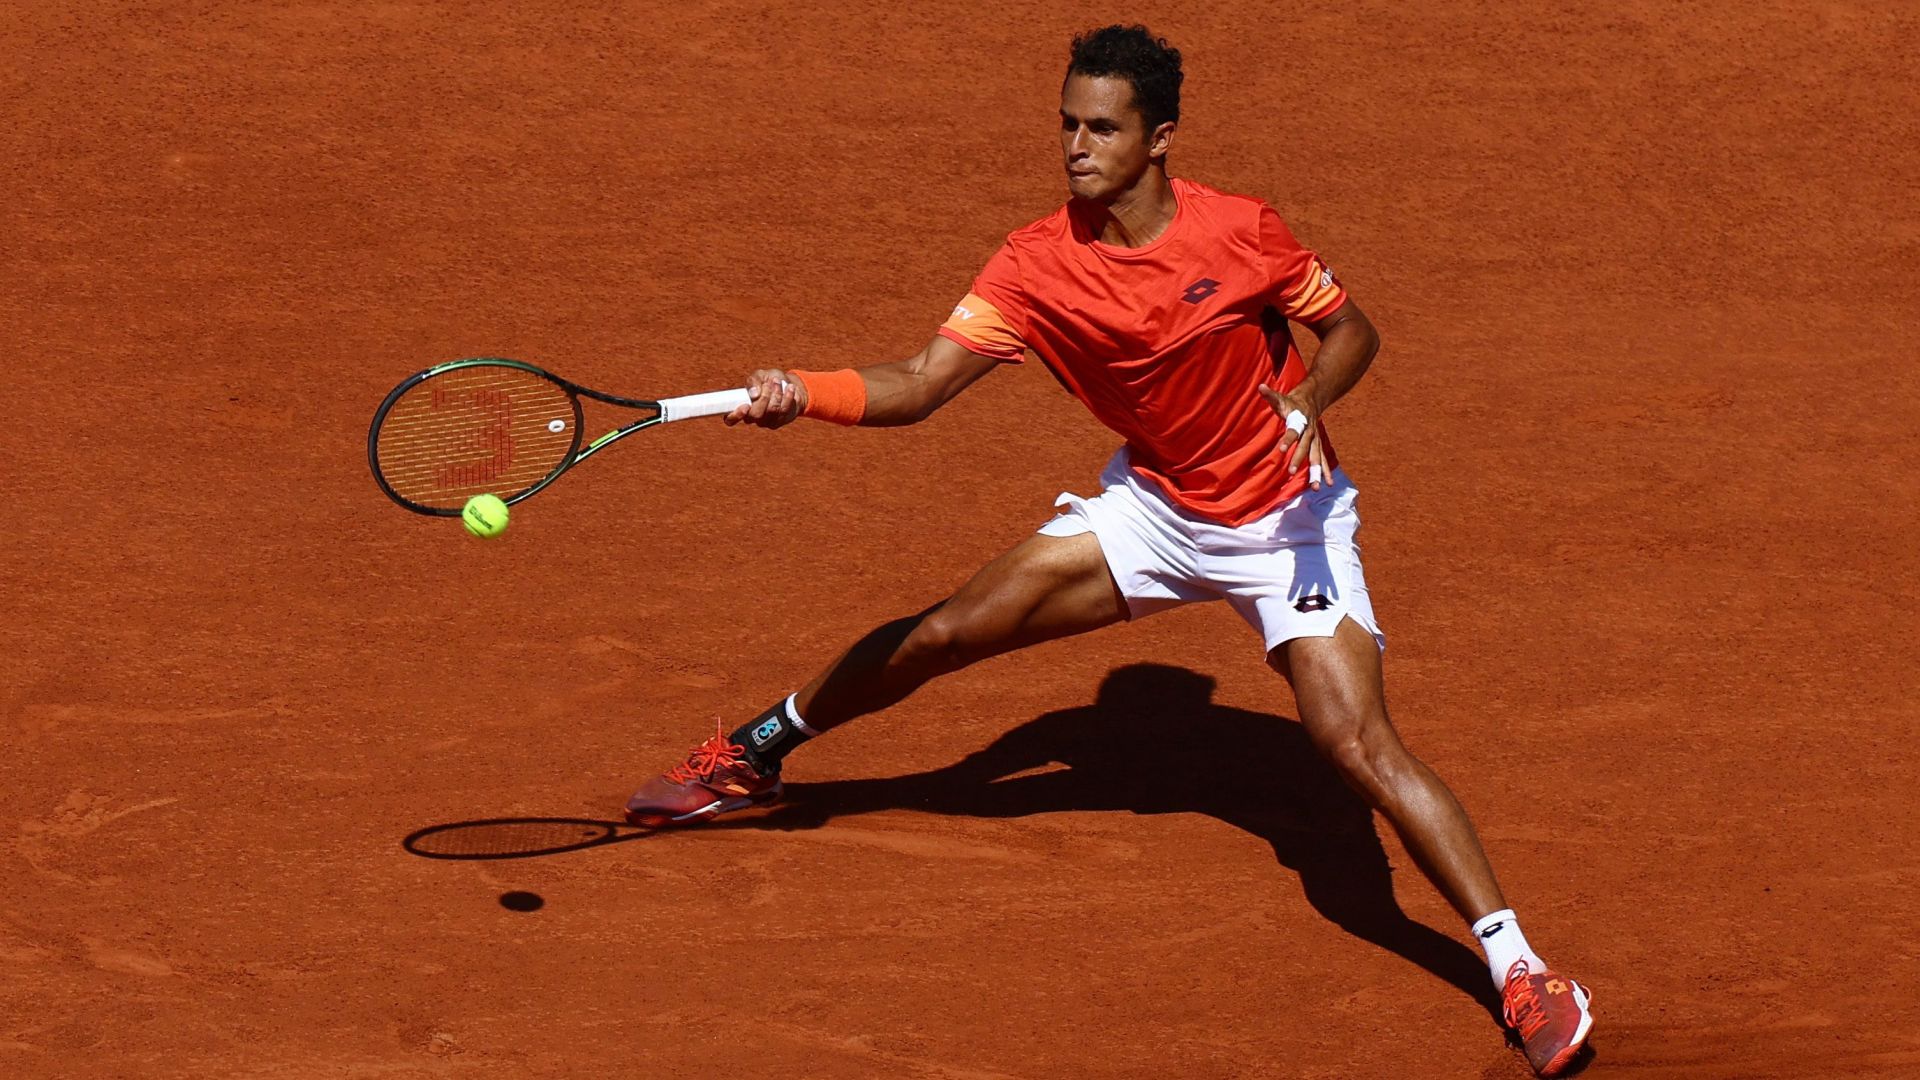 Juan Pablo Varillas vs Novak Djokovic EN VIVO ESPN: juegan el tercer set de cuarta ronda por Ronald Garros 2023